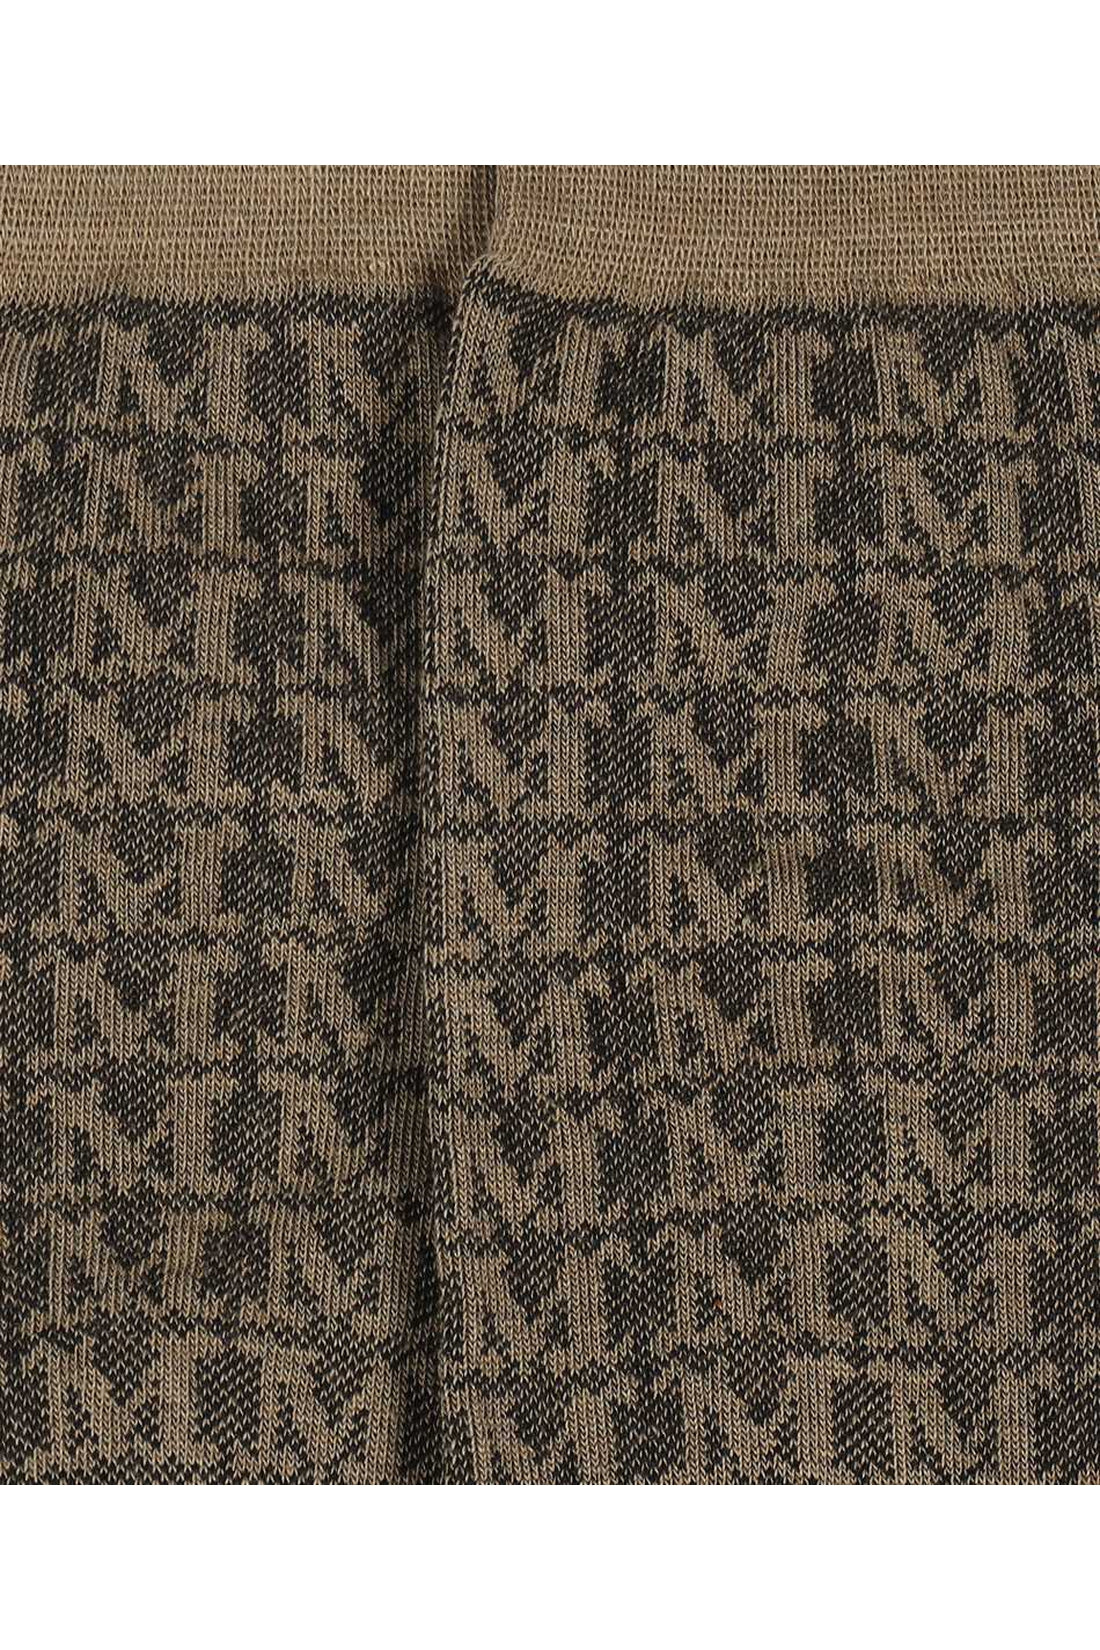 Max Mara-OUTLET-SALE-Zelanda logo cotton blend socks-ARCHIVIST